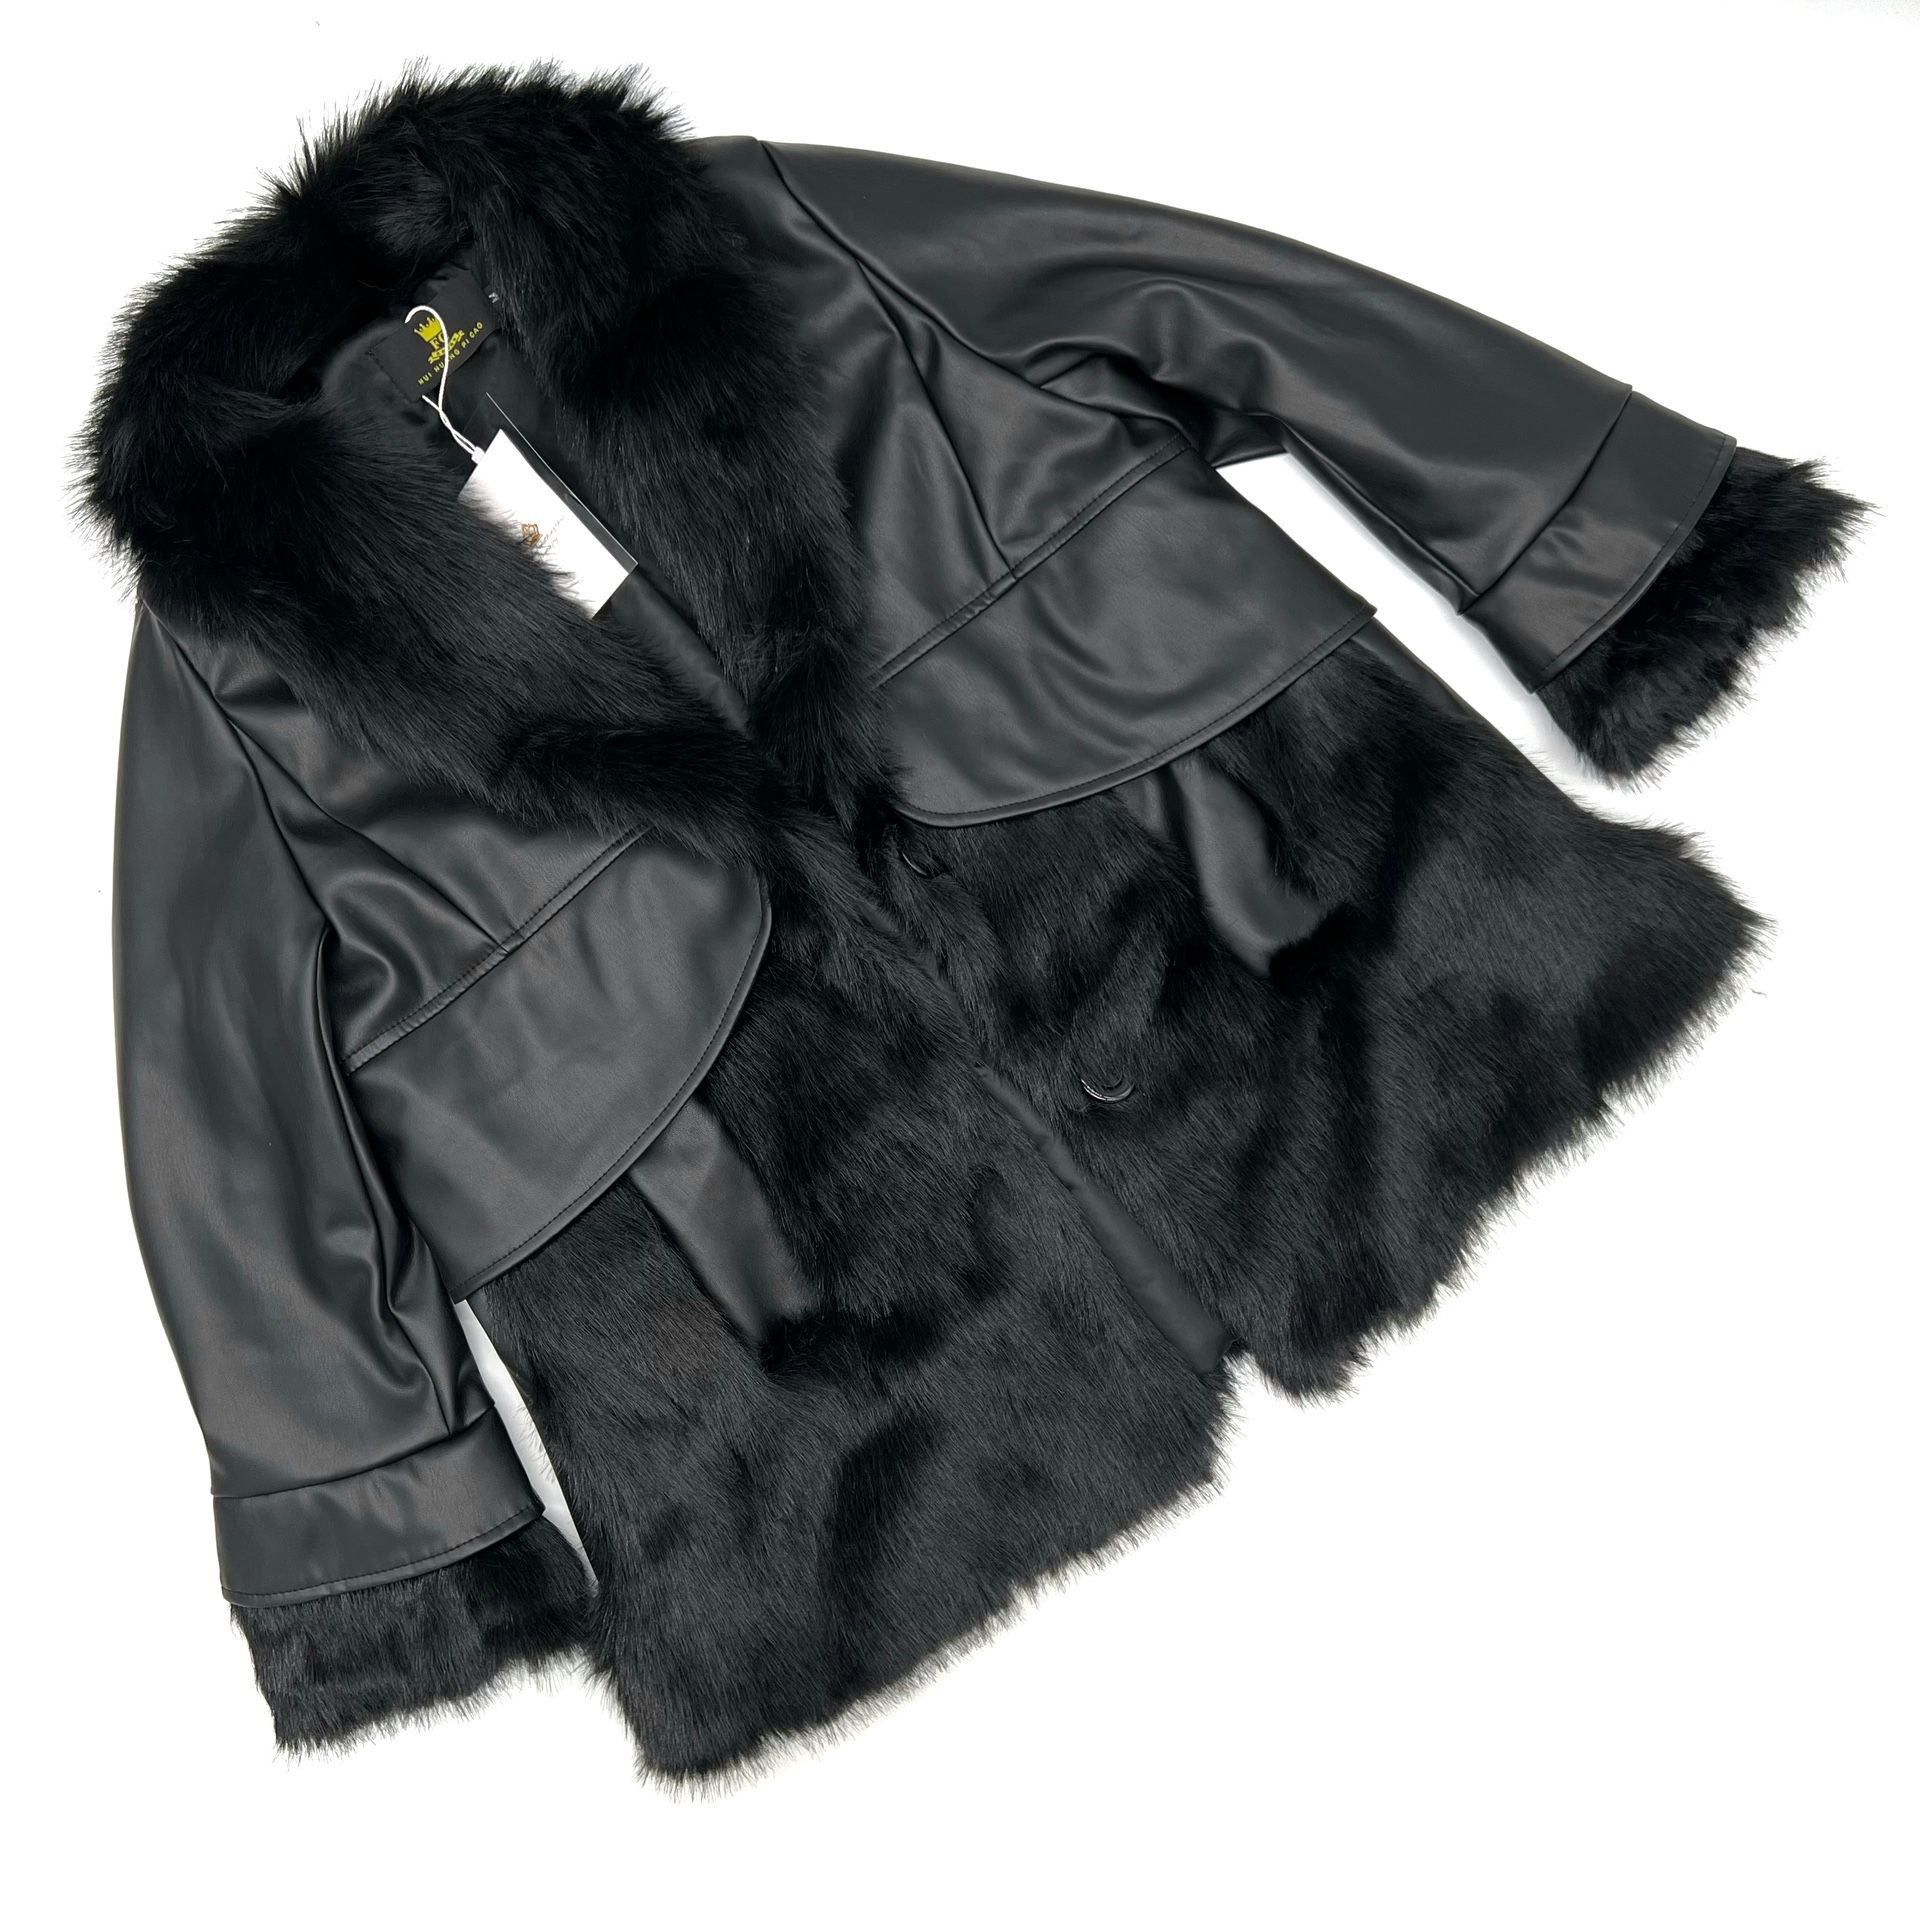 Fur Leather Jacket Loose Winte Jacket Coat Trench Parka Fur Collar Fur Sleeves Lined Puffer Jacket Bomber Jacket Winter 